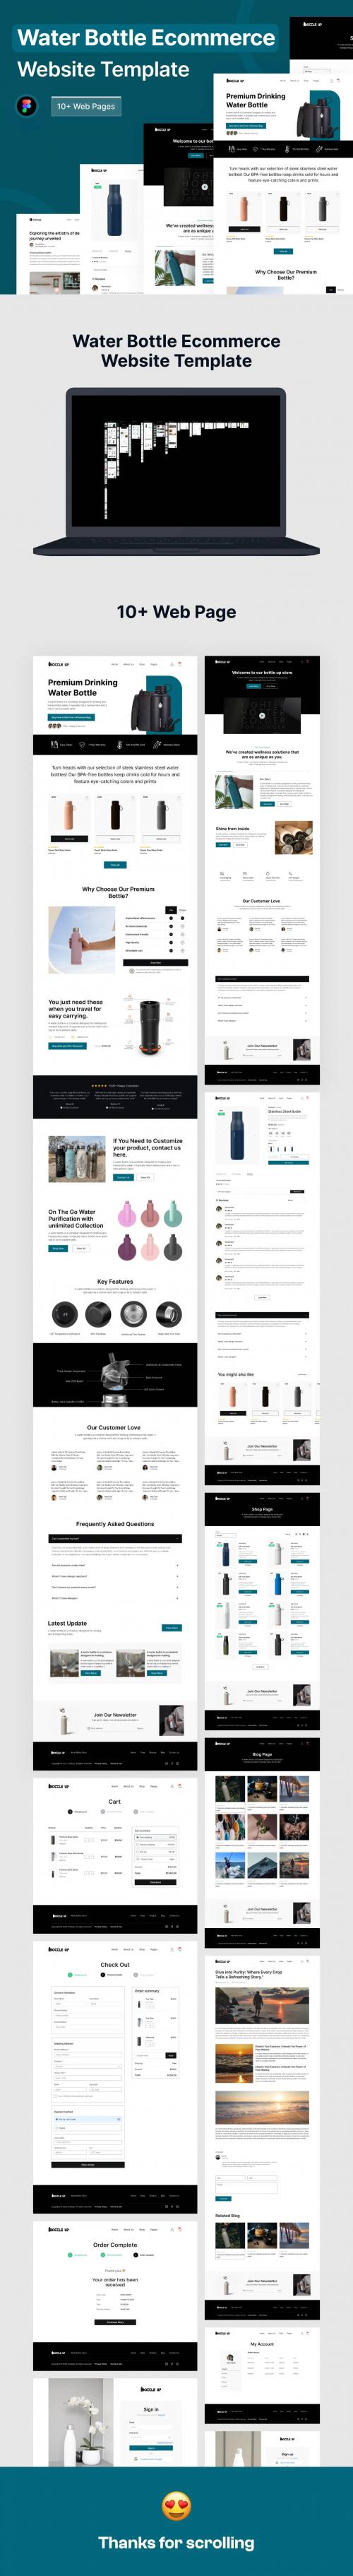 UIHut - Water Bottle E-commerce Website Theme - 26966